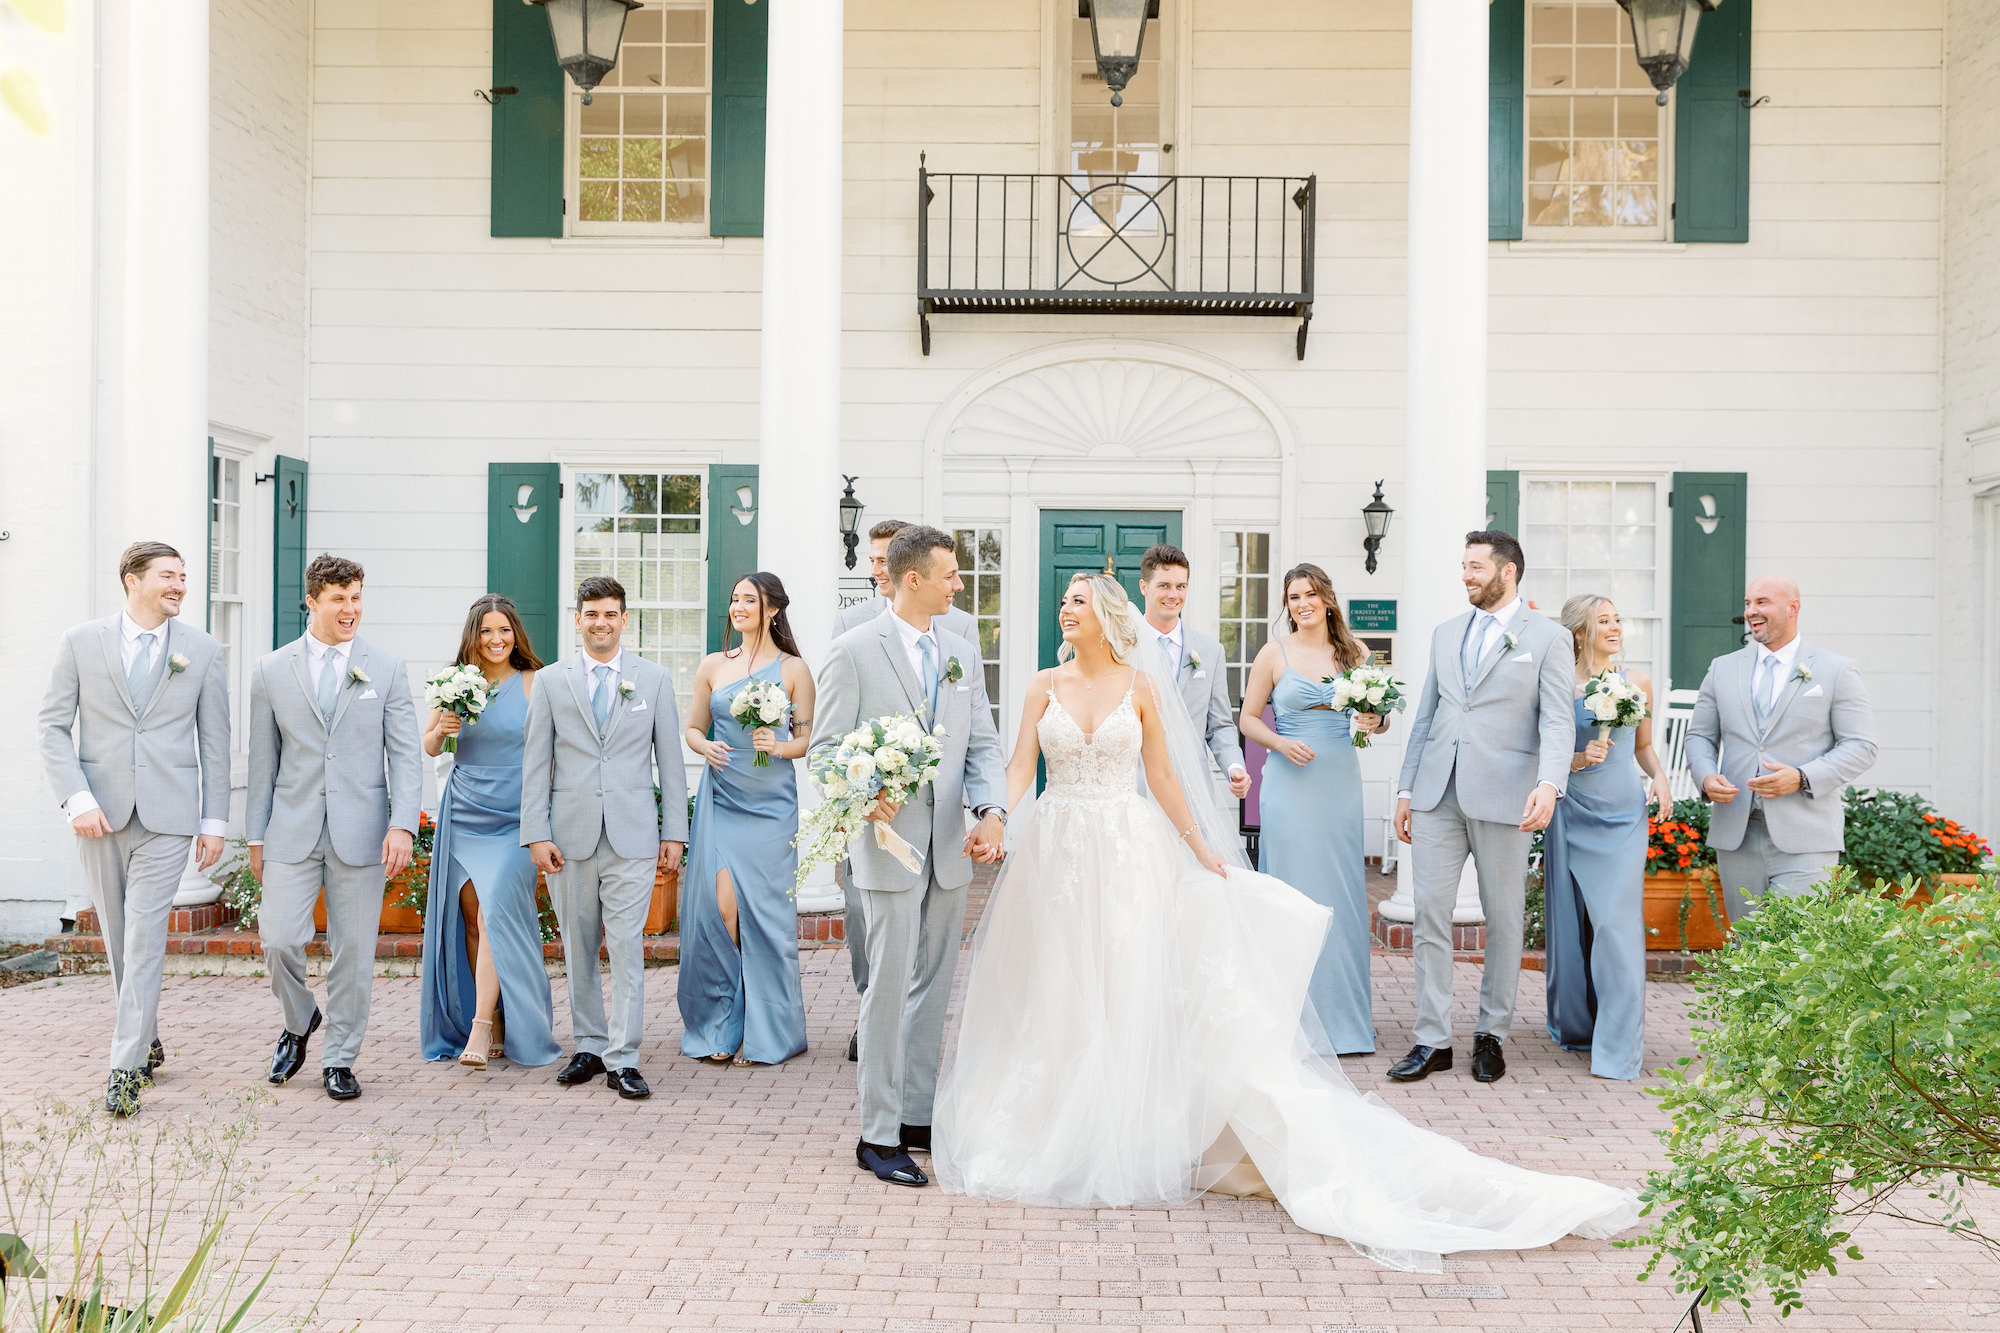 Bridal Party Attire Ideas for Spring Garden Wedding | Matching Dusty Blue Bridesmaids Dresses | Groomsmen Light Gray Suit